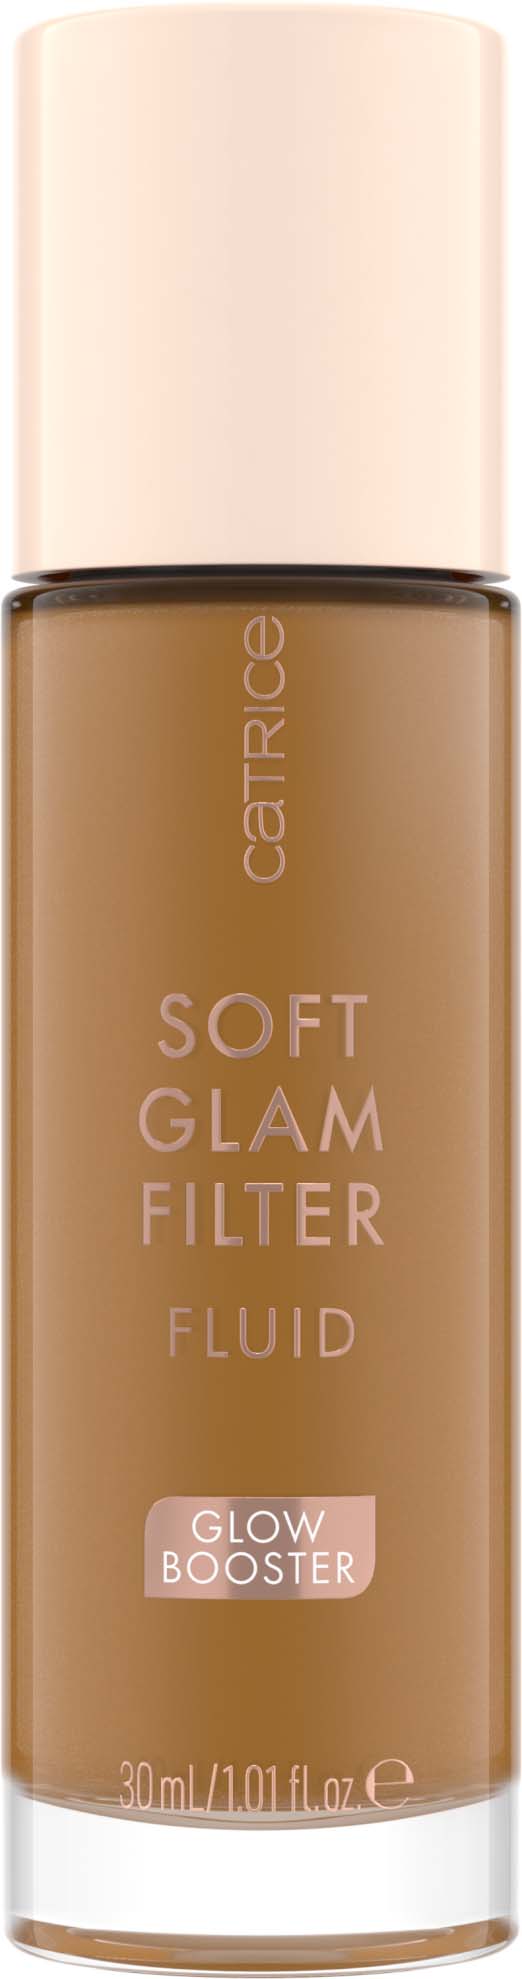 Fluid Tan-Deep Glam Soft Catrice Filter 080